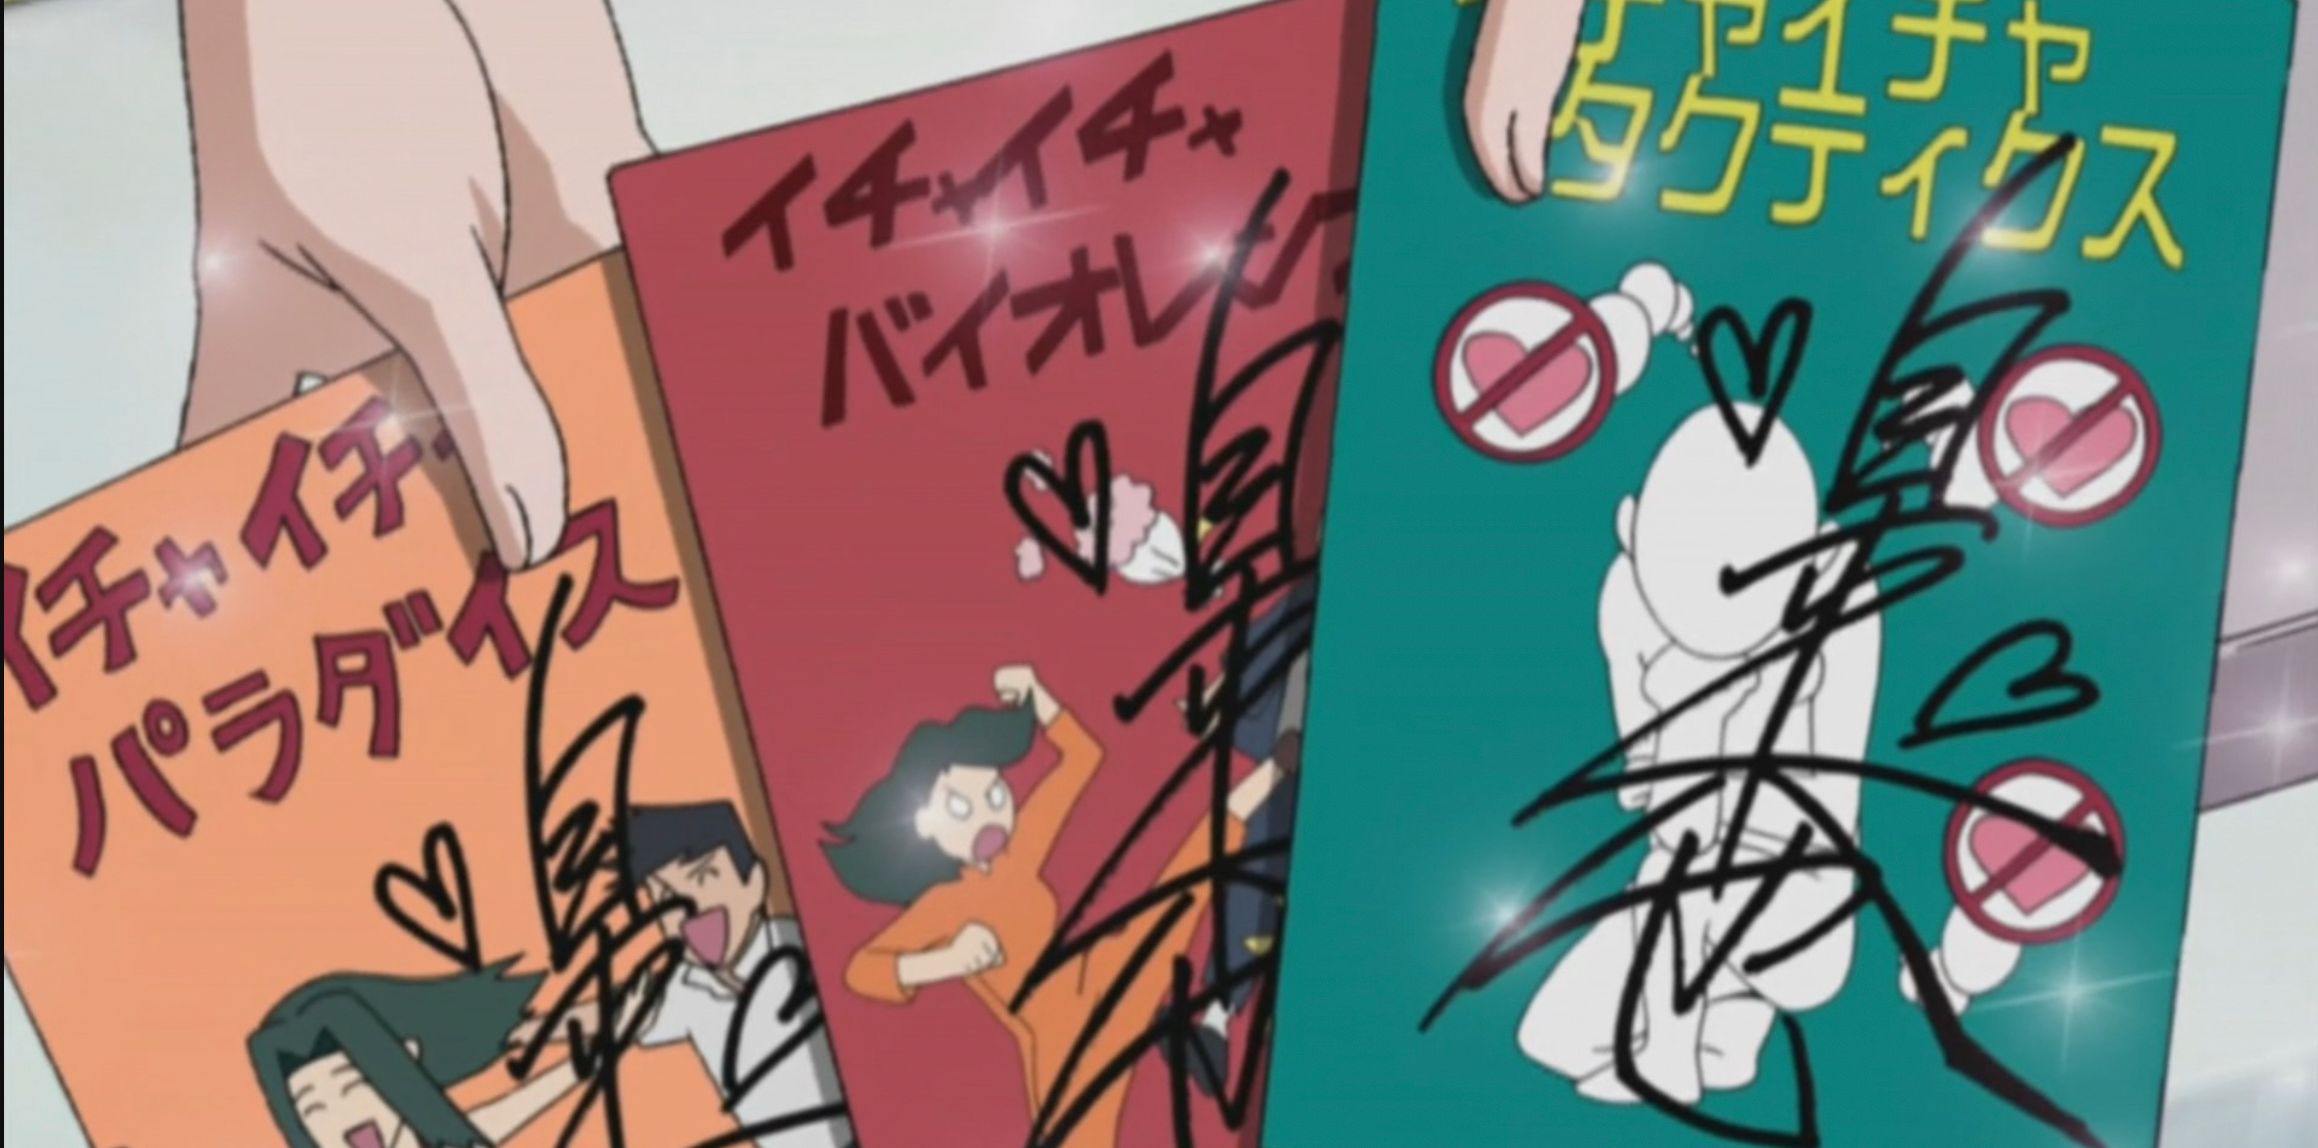 A closeup of Jiraiya's signed books in Naruto